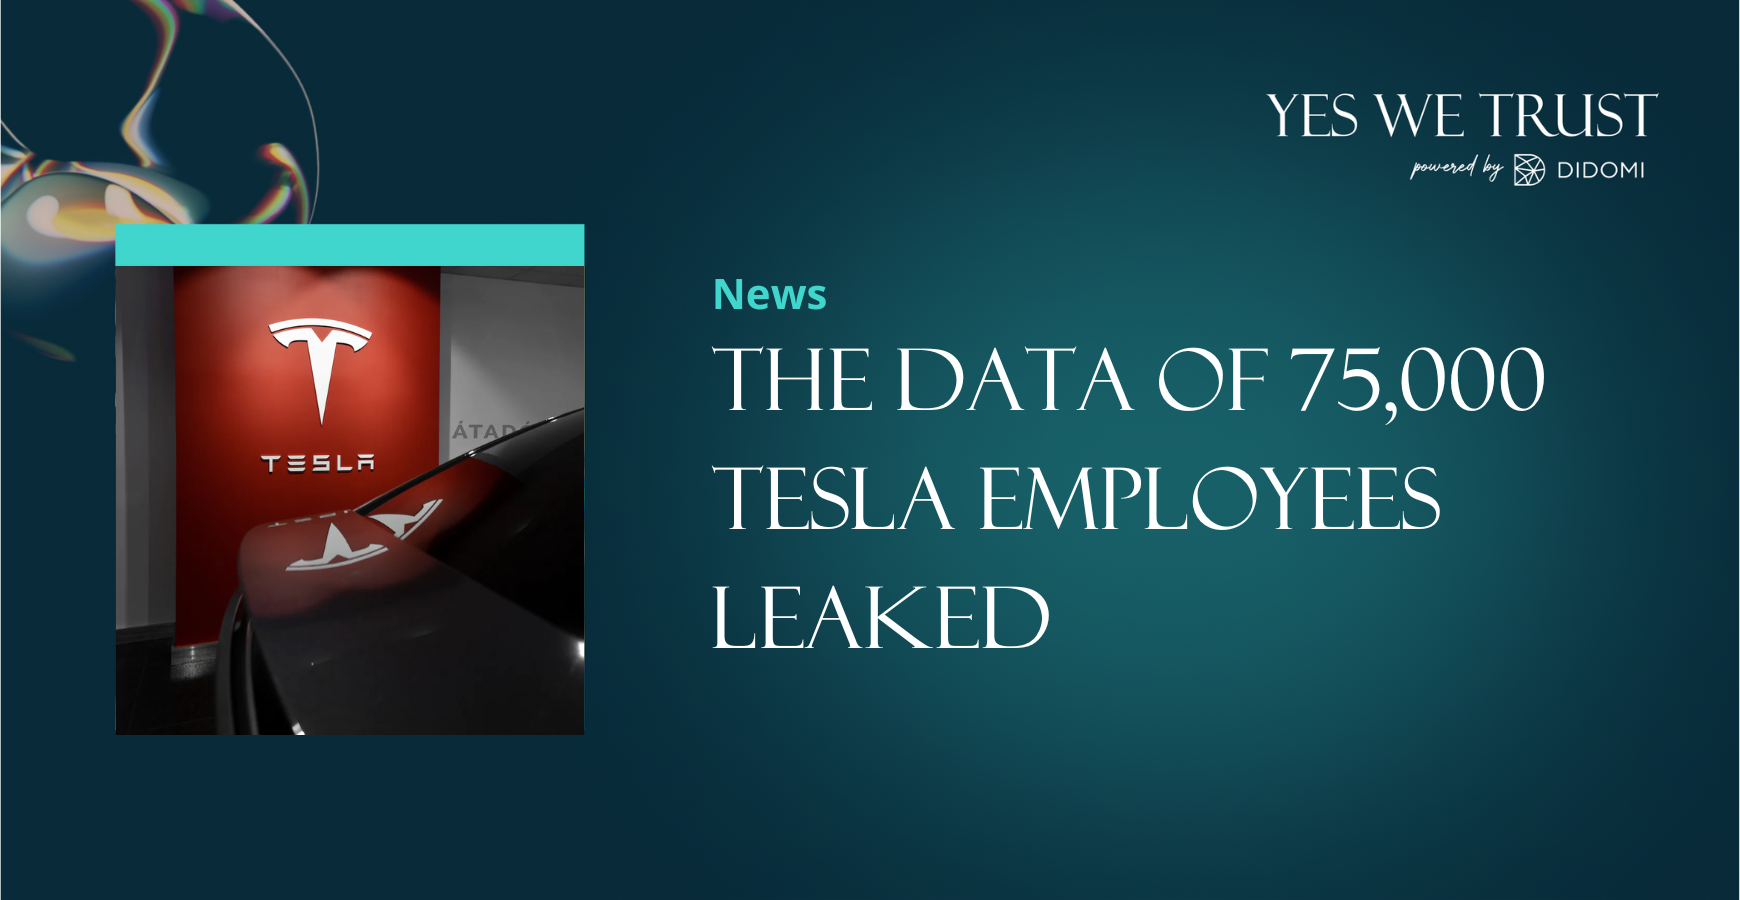 The data of 75,000 Tesla employees leaked